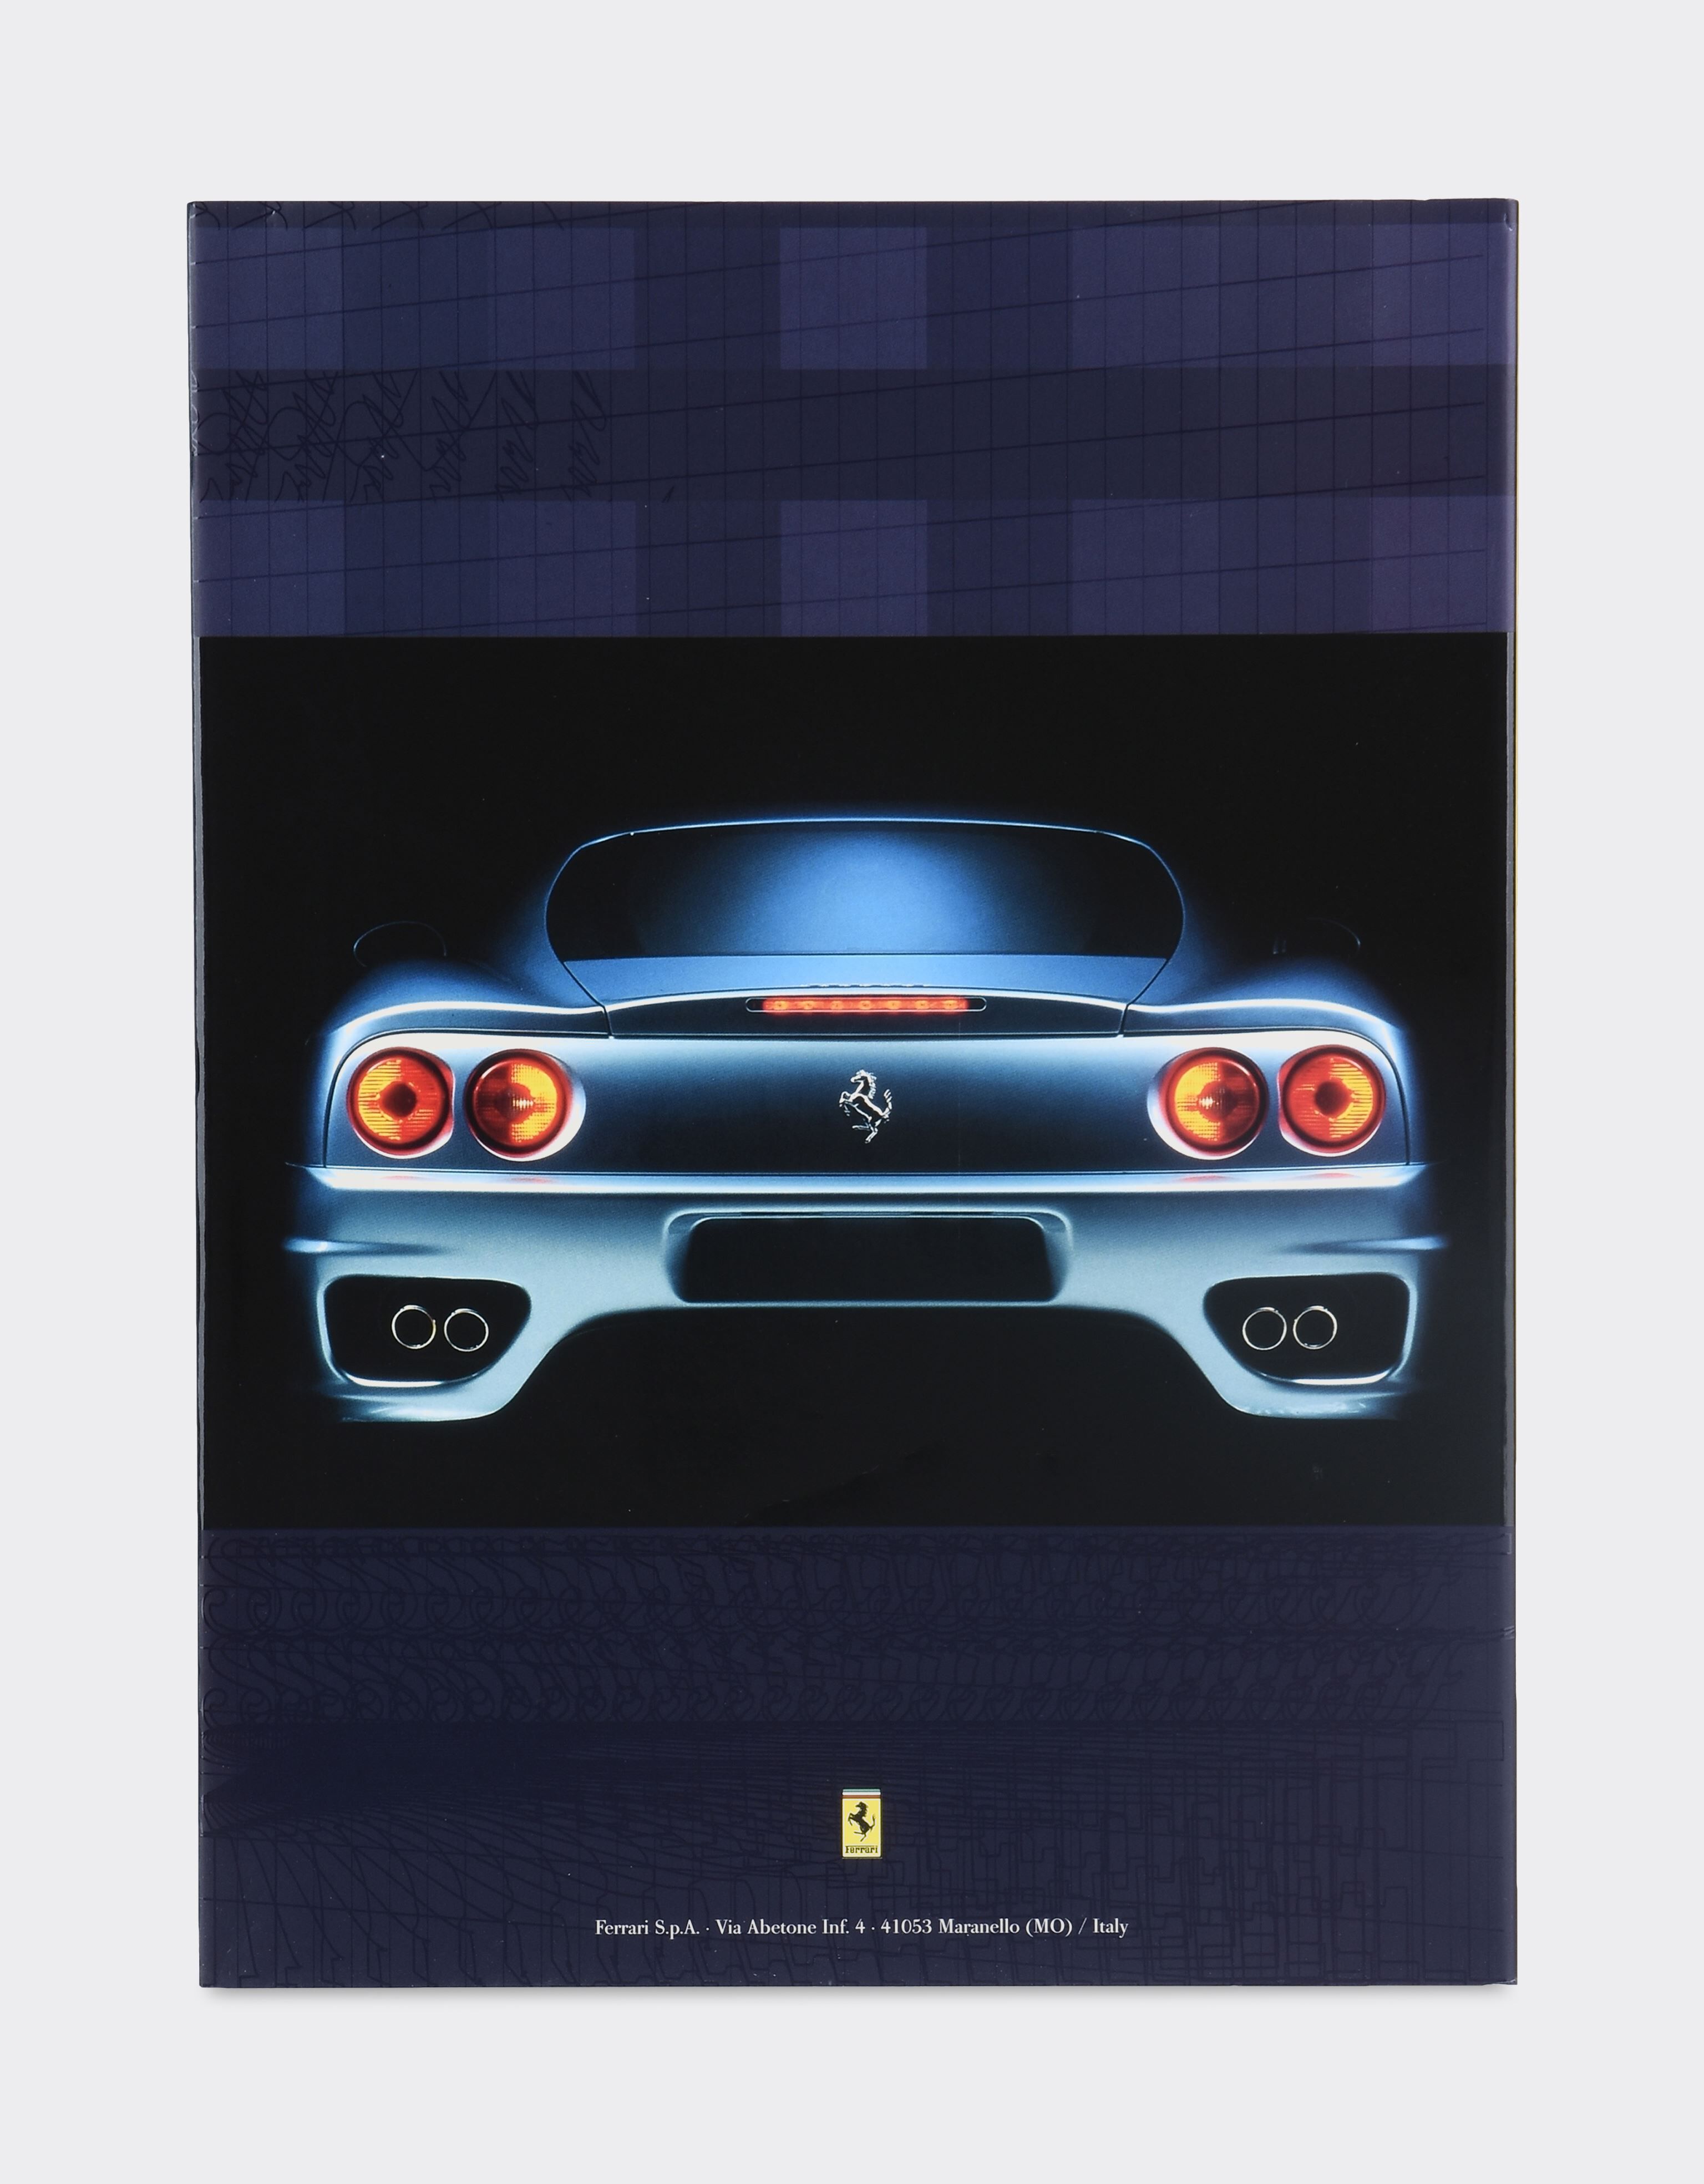 Ferrari Ferrari 1999 Yearbook 多色 00628f